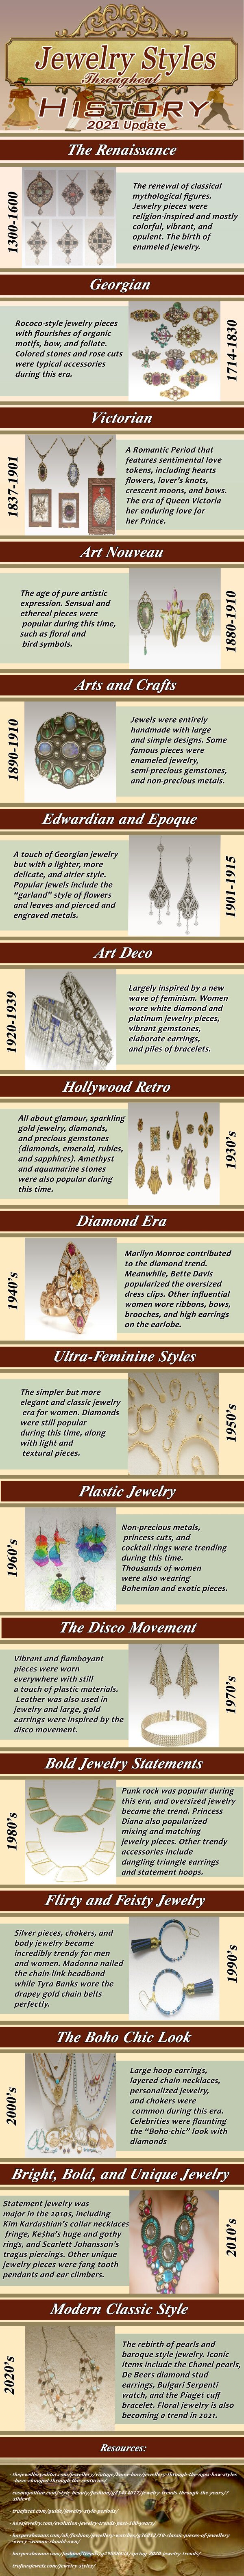 Jewelry Styles infographic